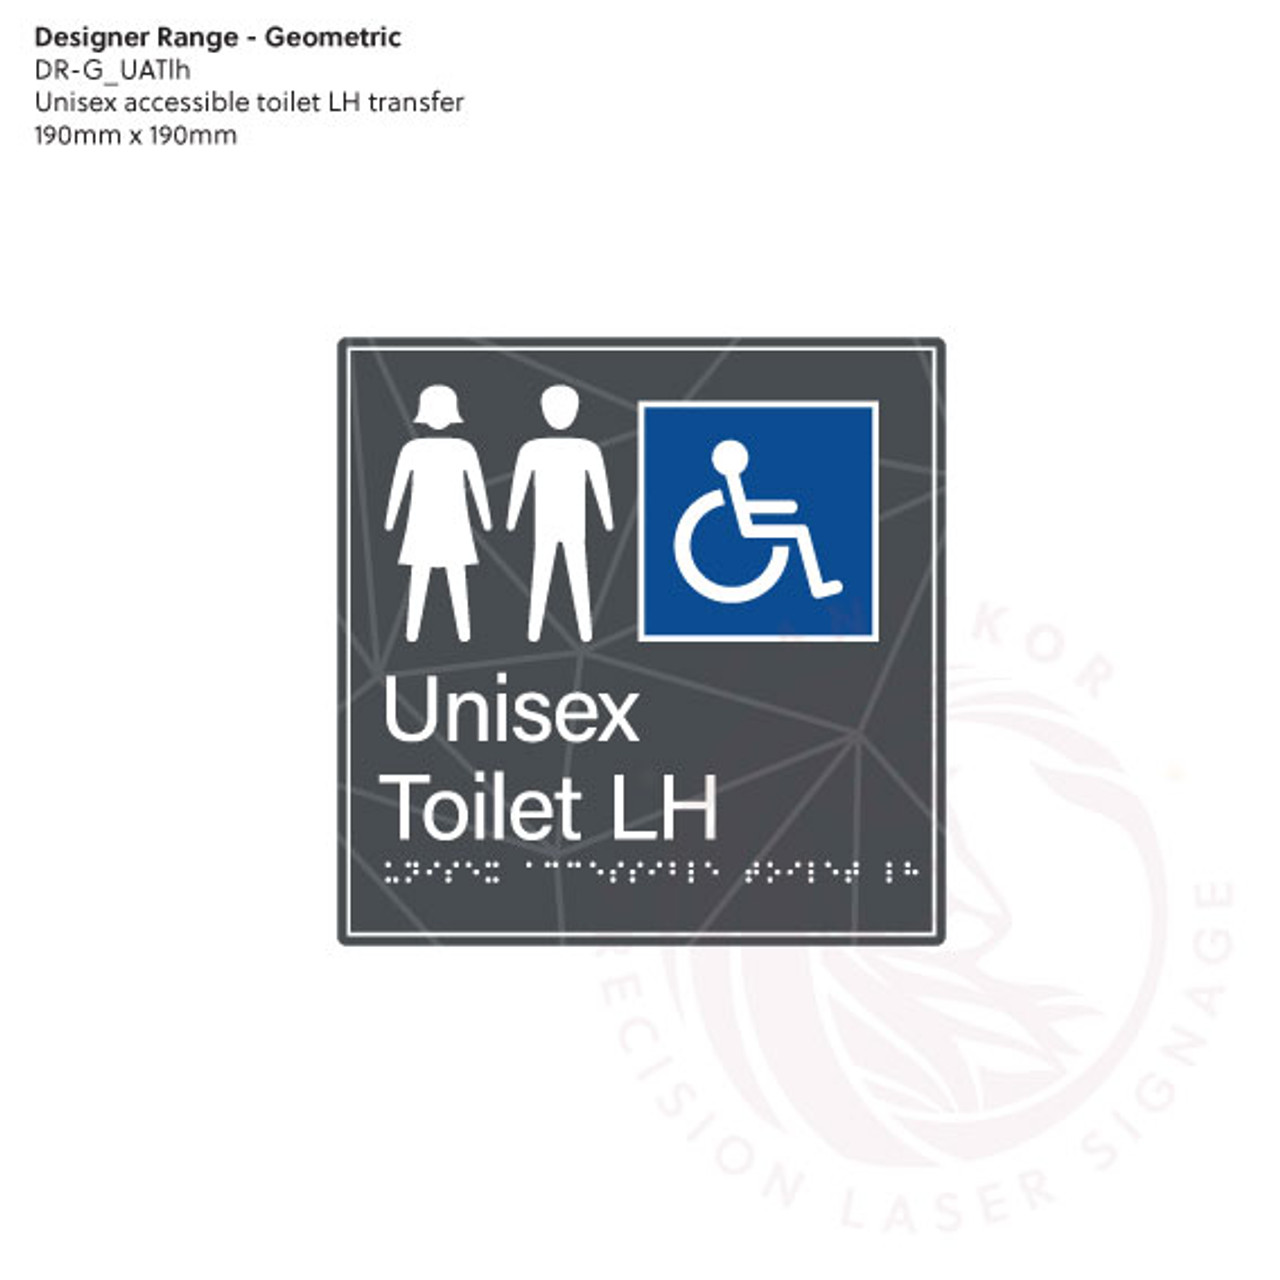 Geometric Designer Range - Unisex Accessible Toilet LH